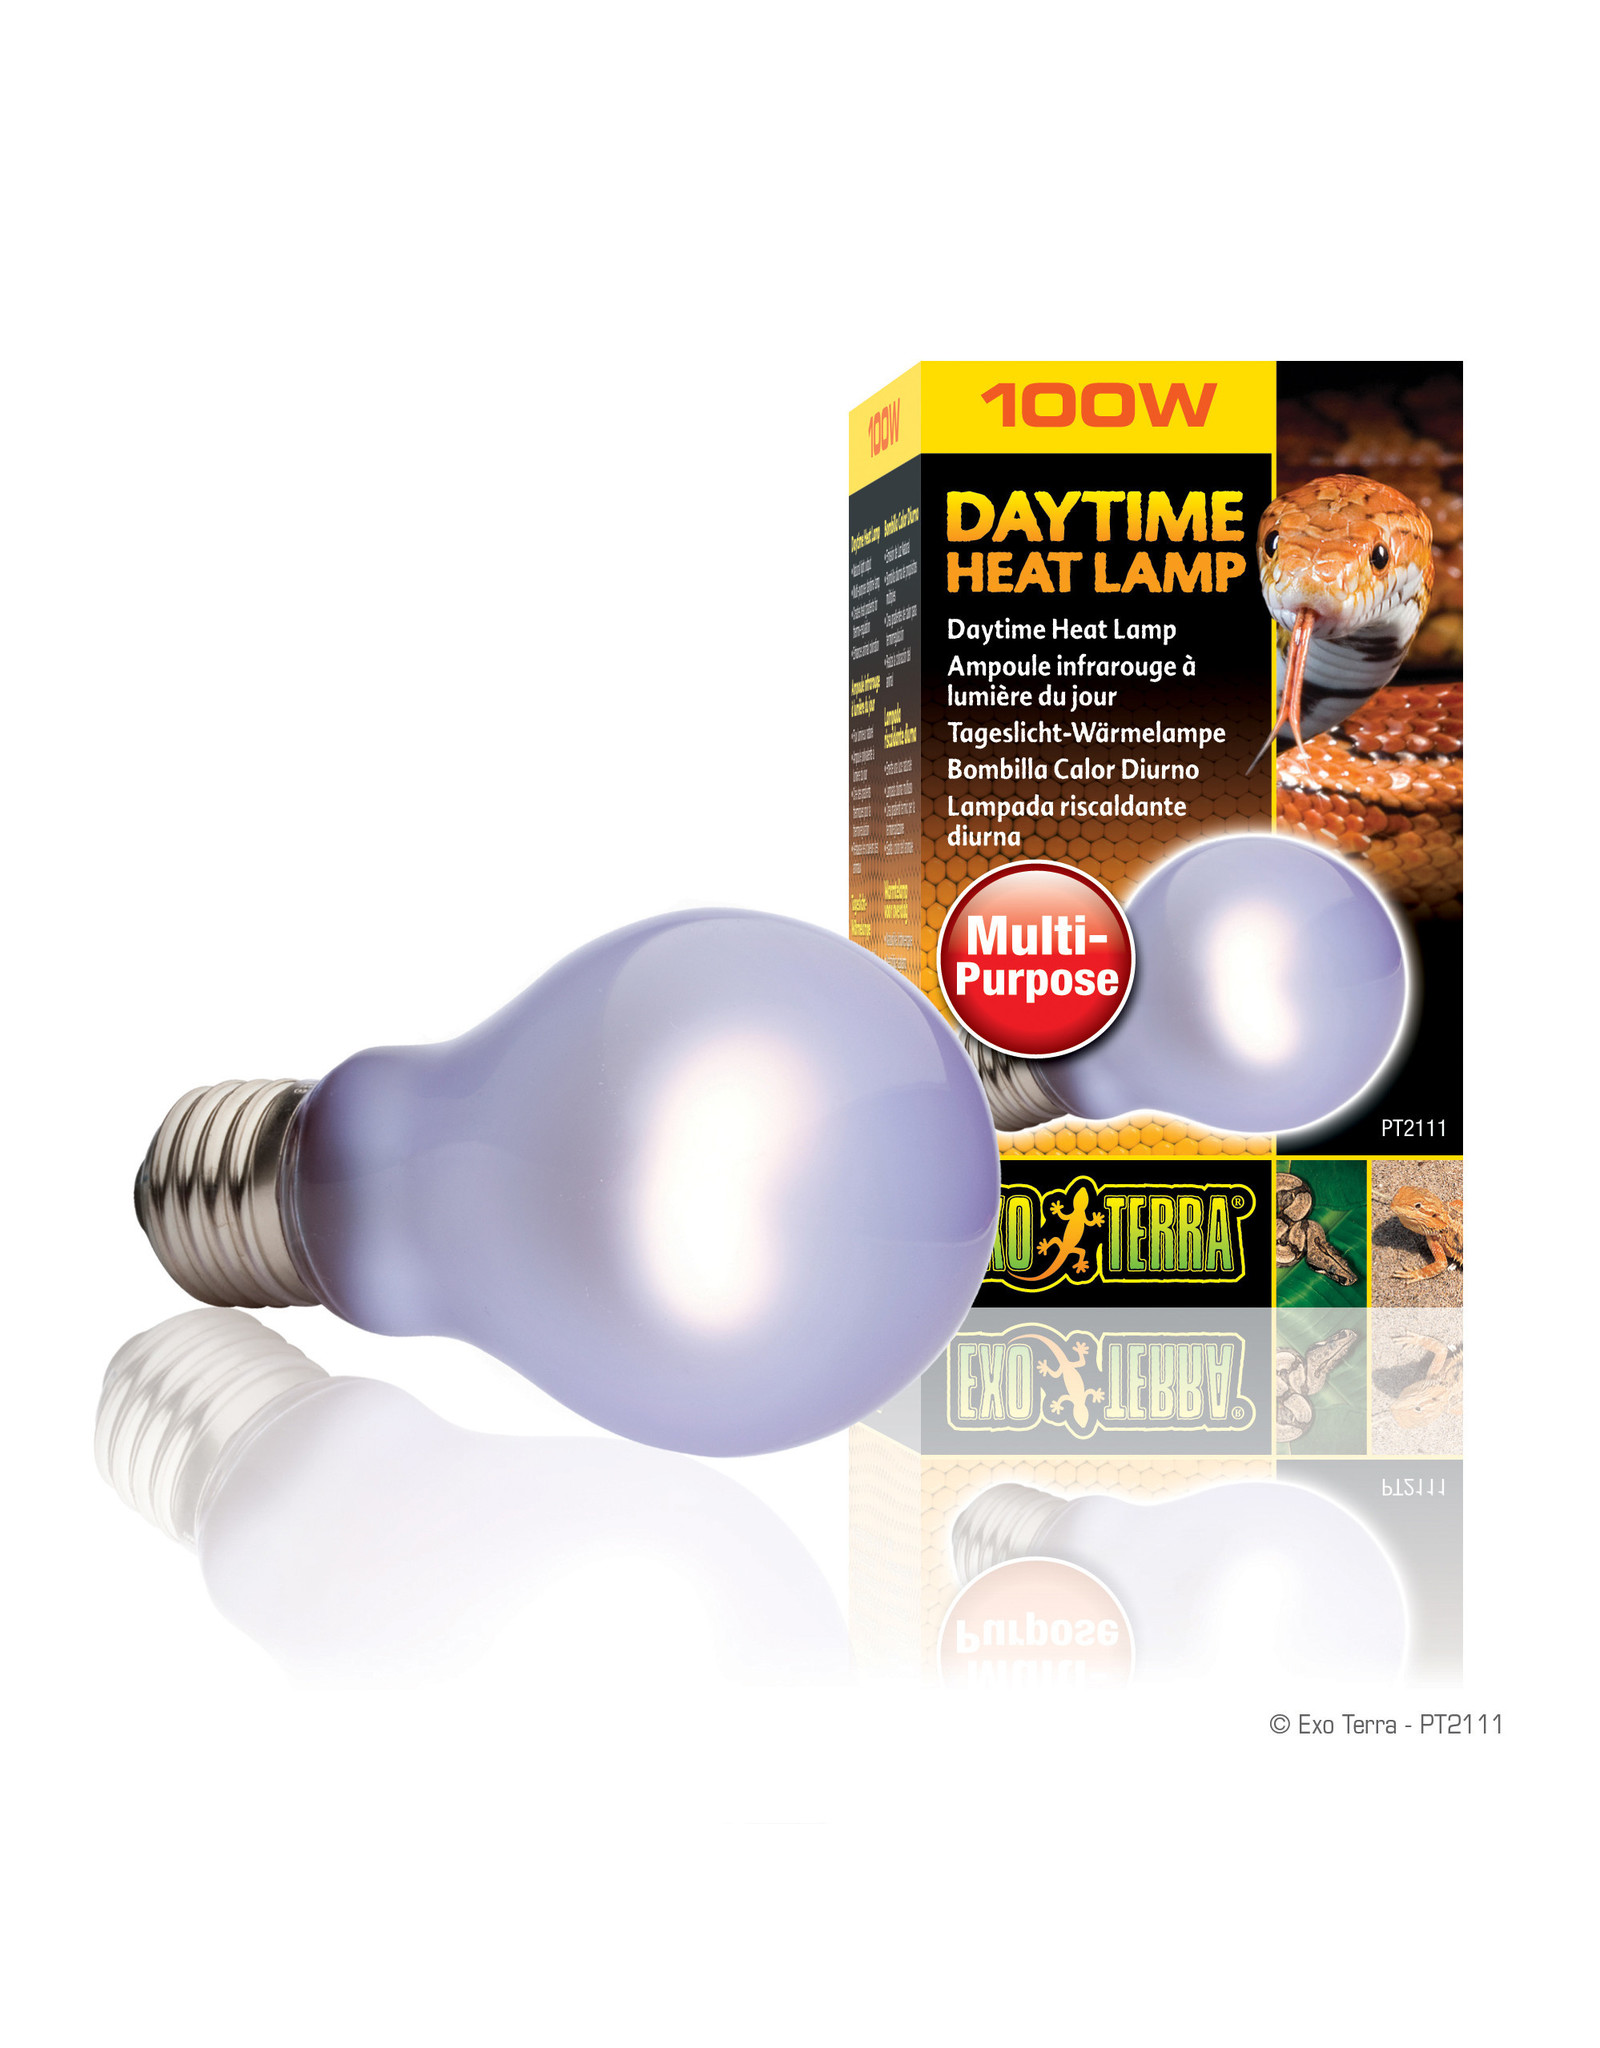 Exo Terra Daytime Heat Lamp A19/100W